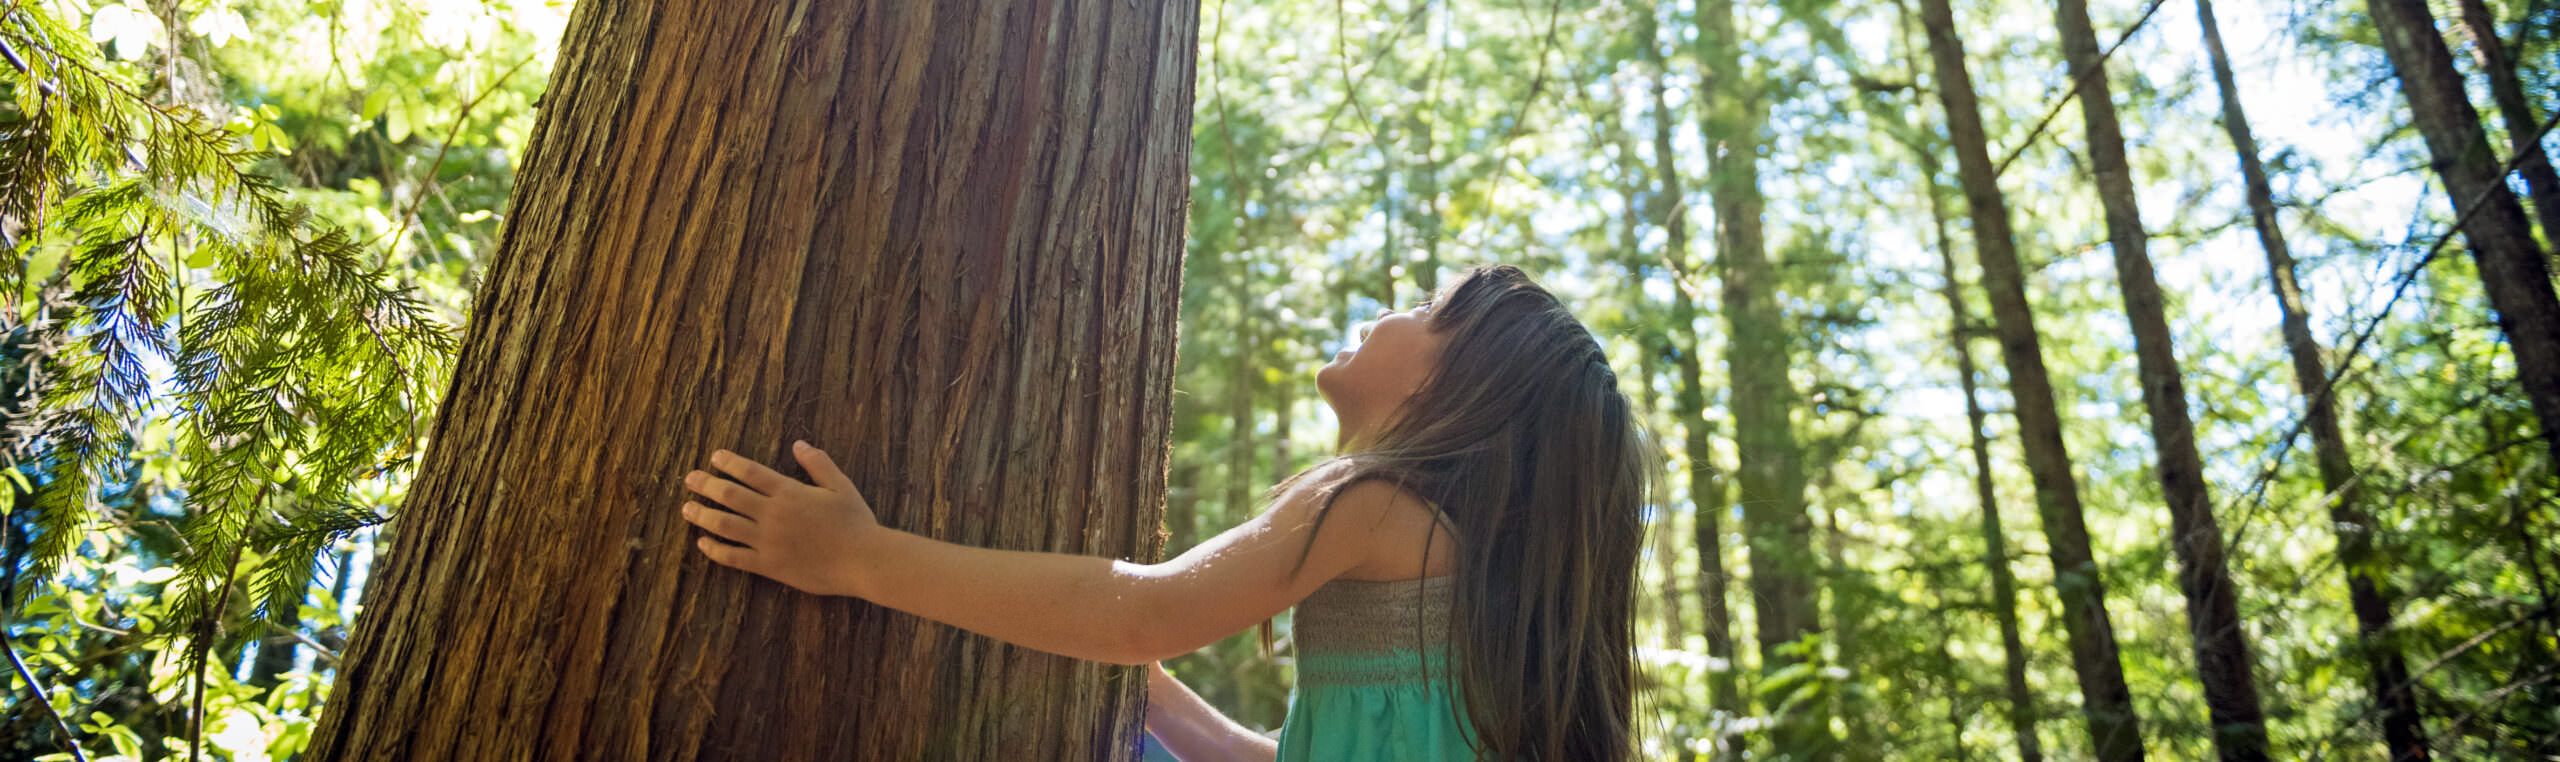 10 Easy Ways Kids Can Help Save Rainforests | Rainforest Alliance